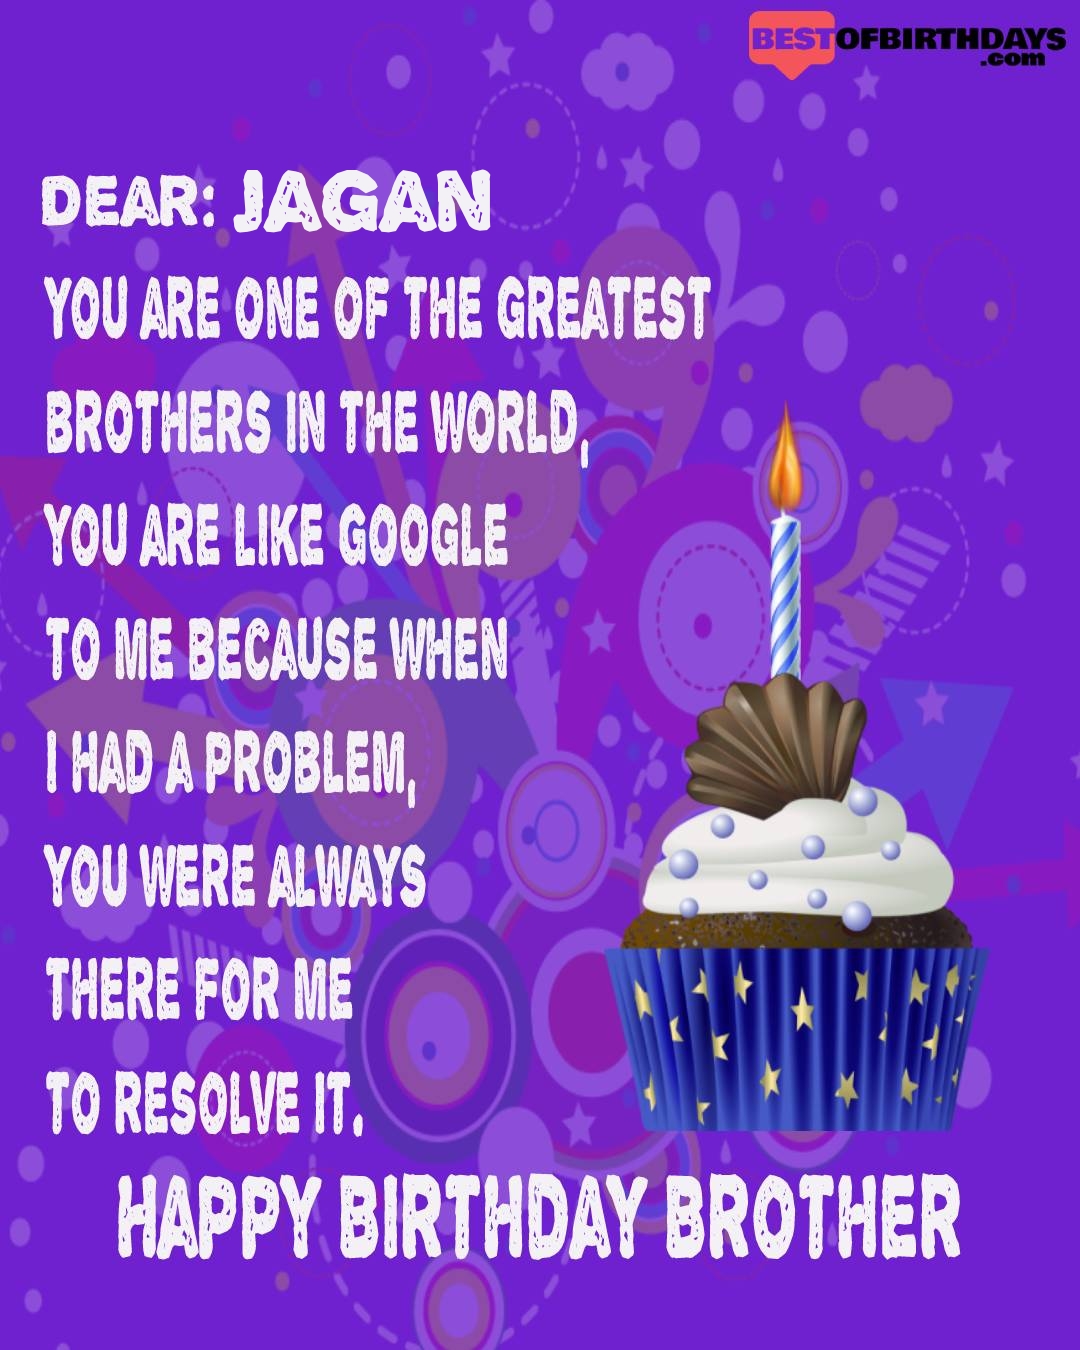 Happy birthday jagan bhai brother bro